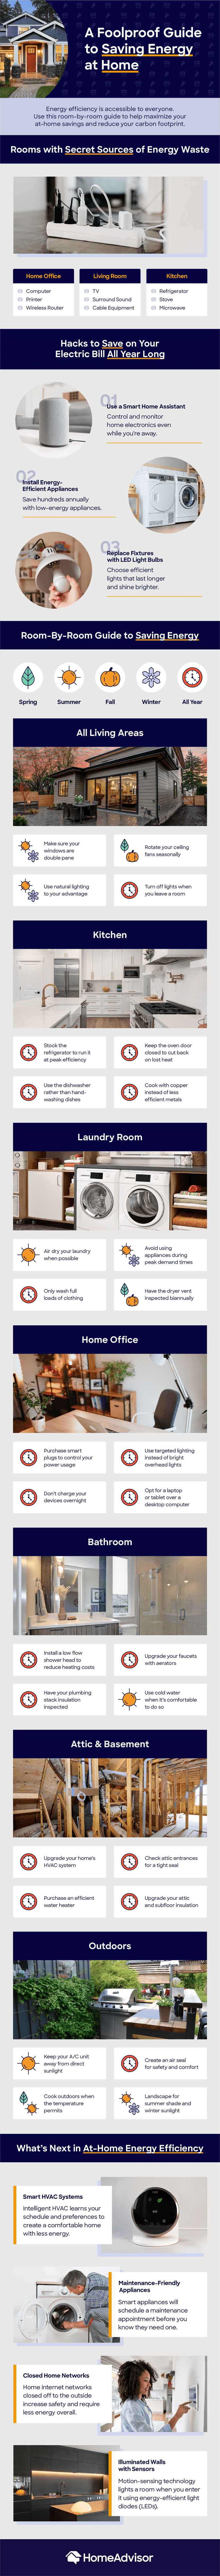 Guide to Saving Energy at Home [Visual] | ecogreenlove